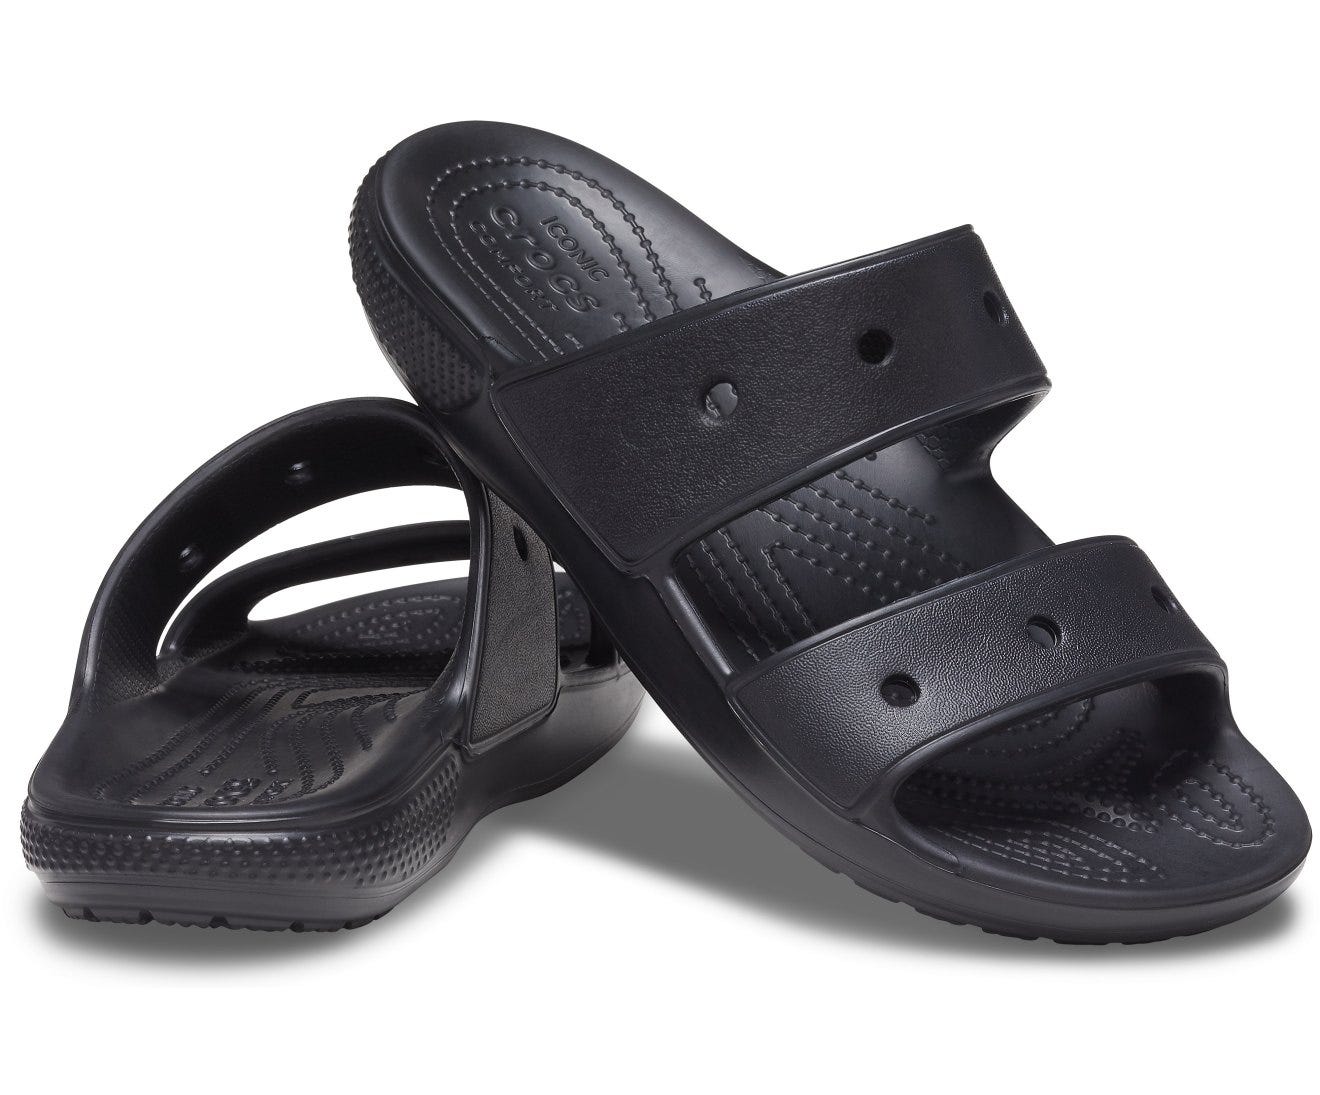 Crocs Classic Sandals in Black